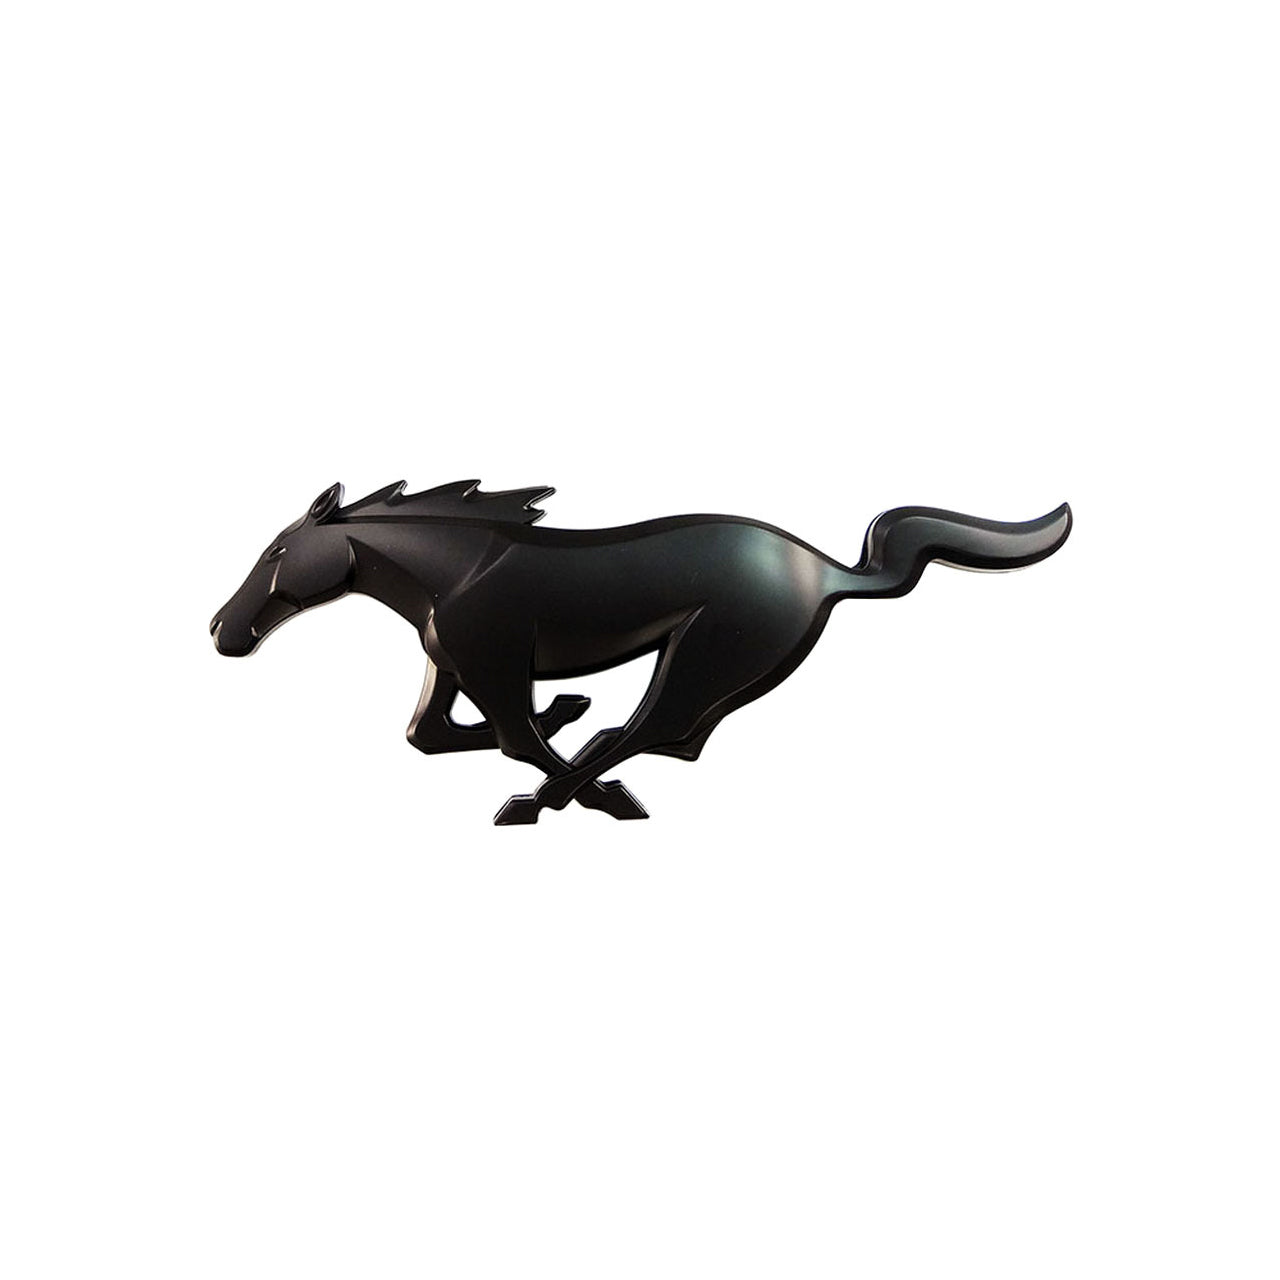 Ford Rear Pony Emblem (Matte Black) for Mustang 2015-22 | #EM0005RHRM - Available from NEMESISUK.COM